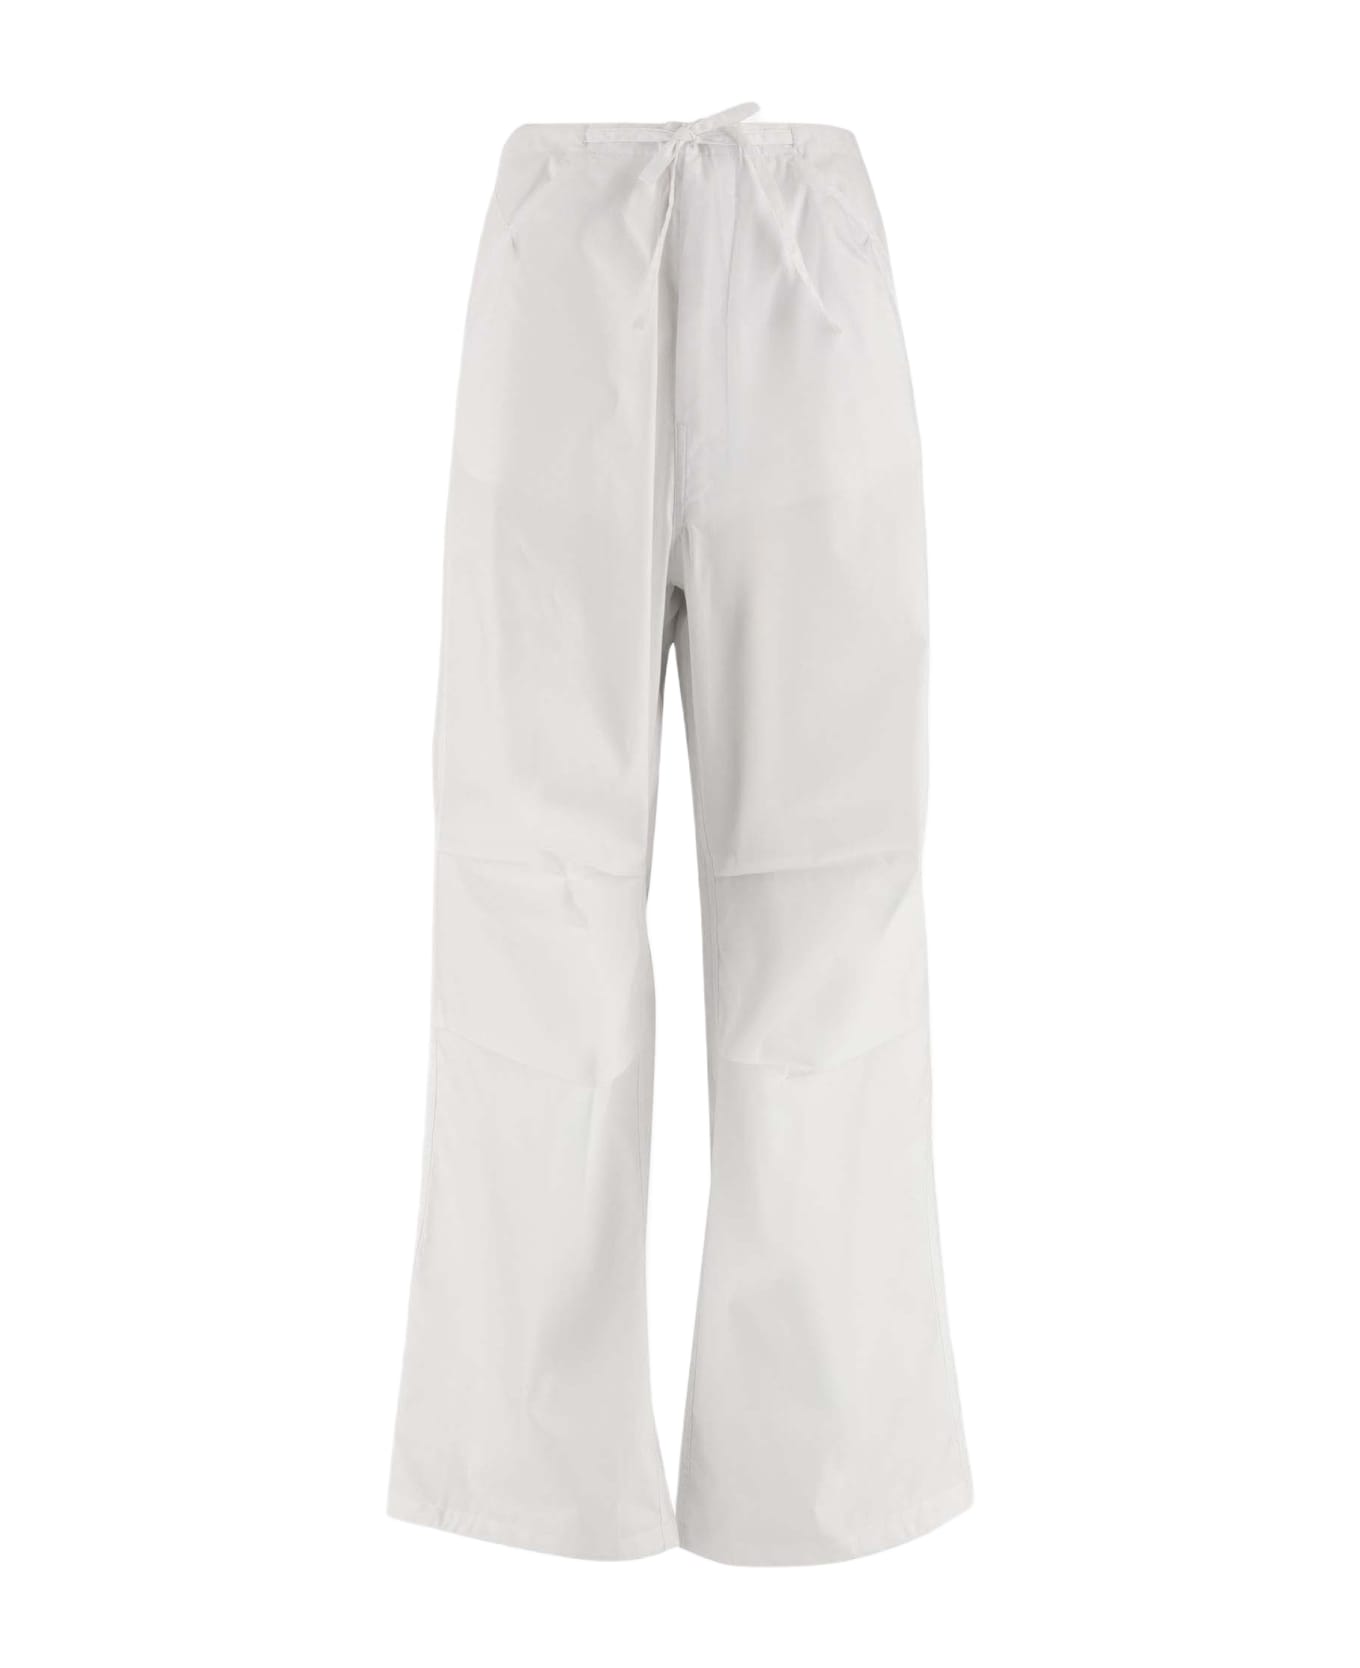 DARKPARK Cotton Pants - White